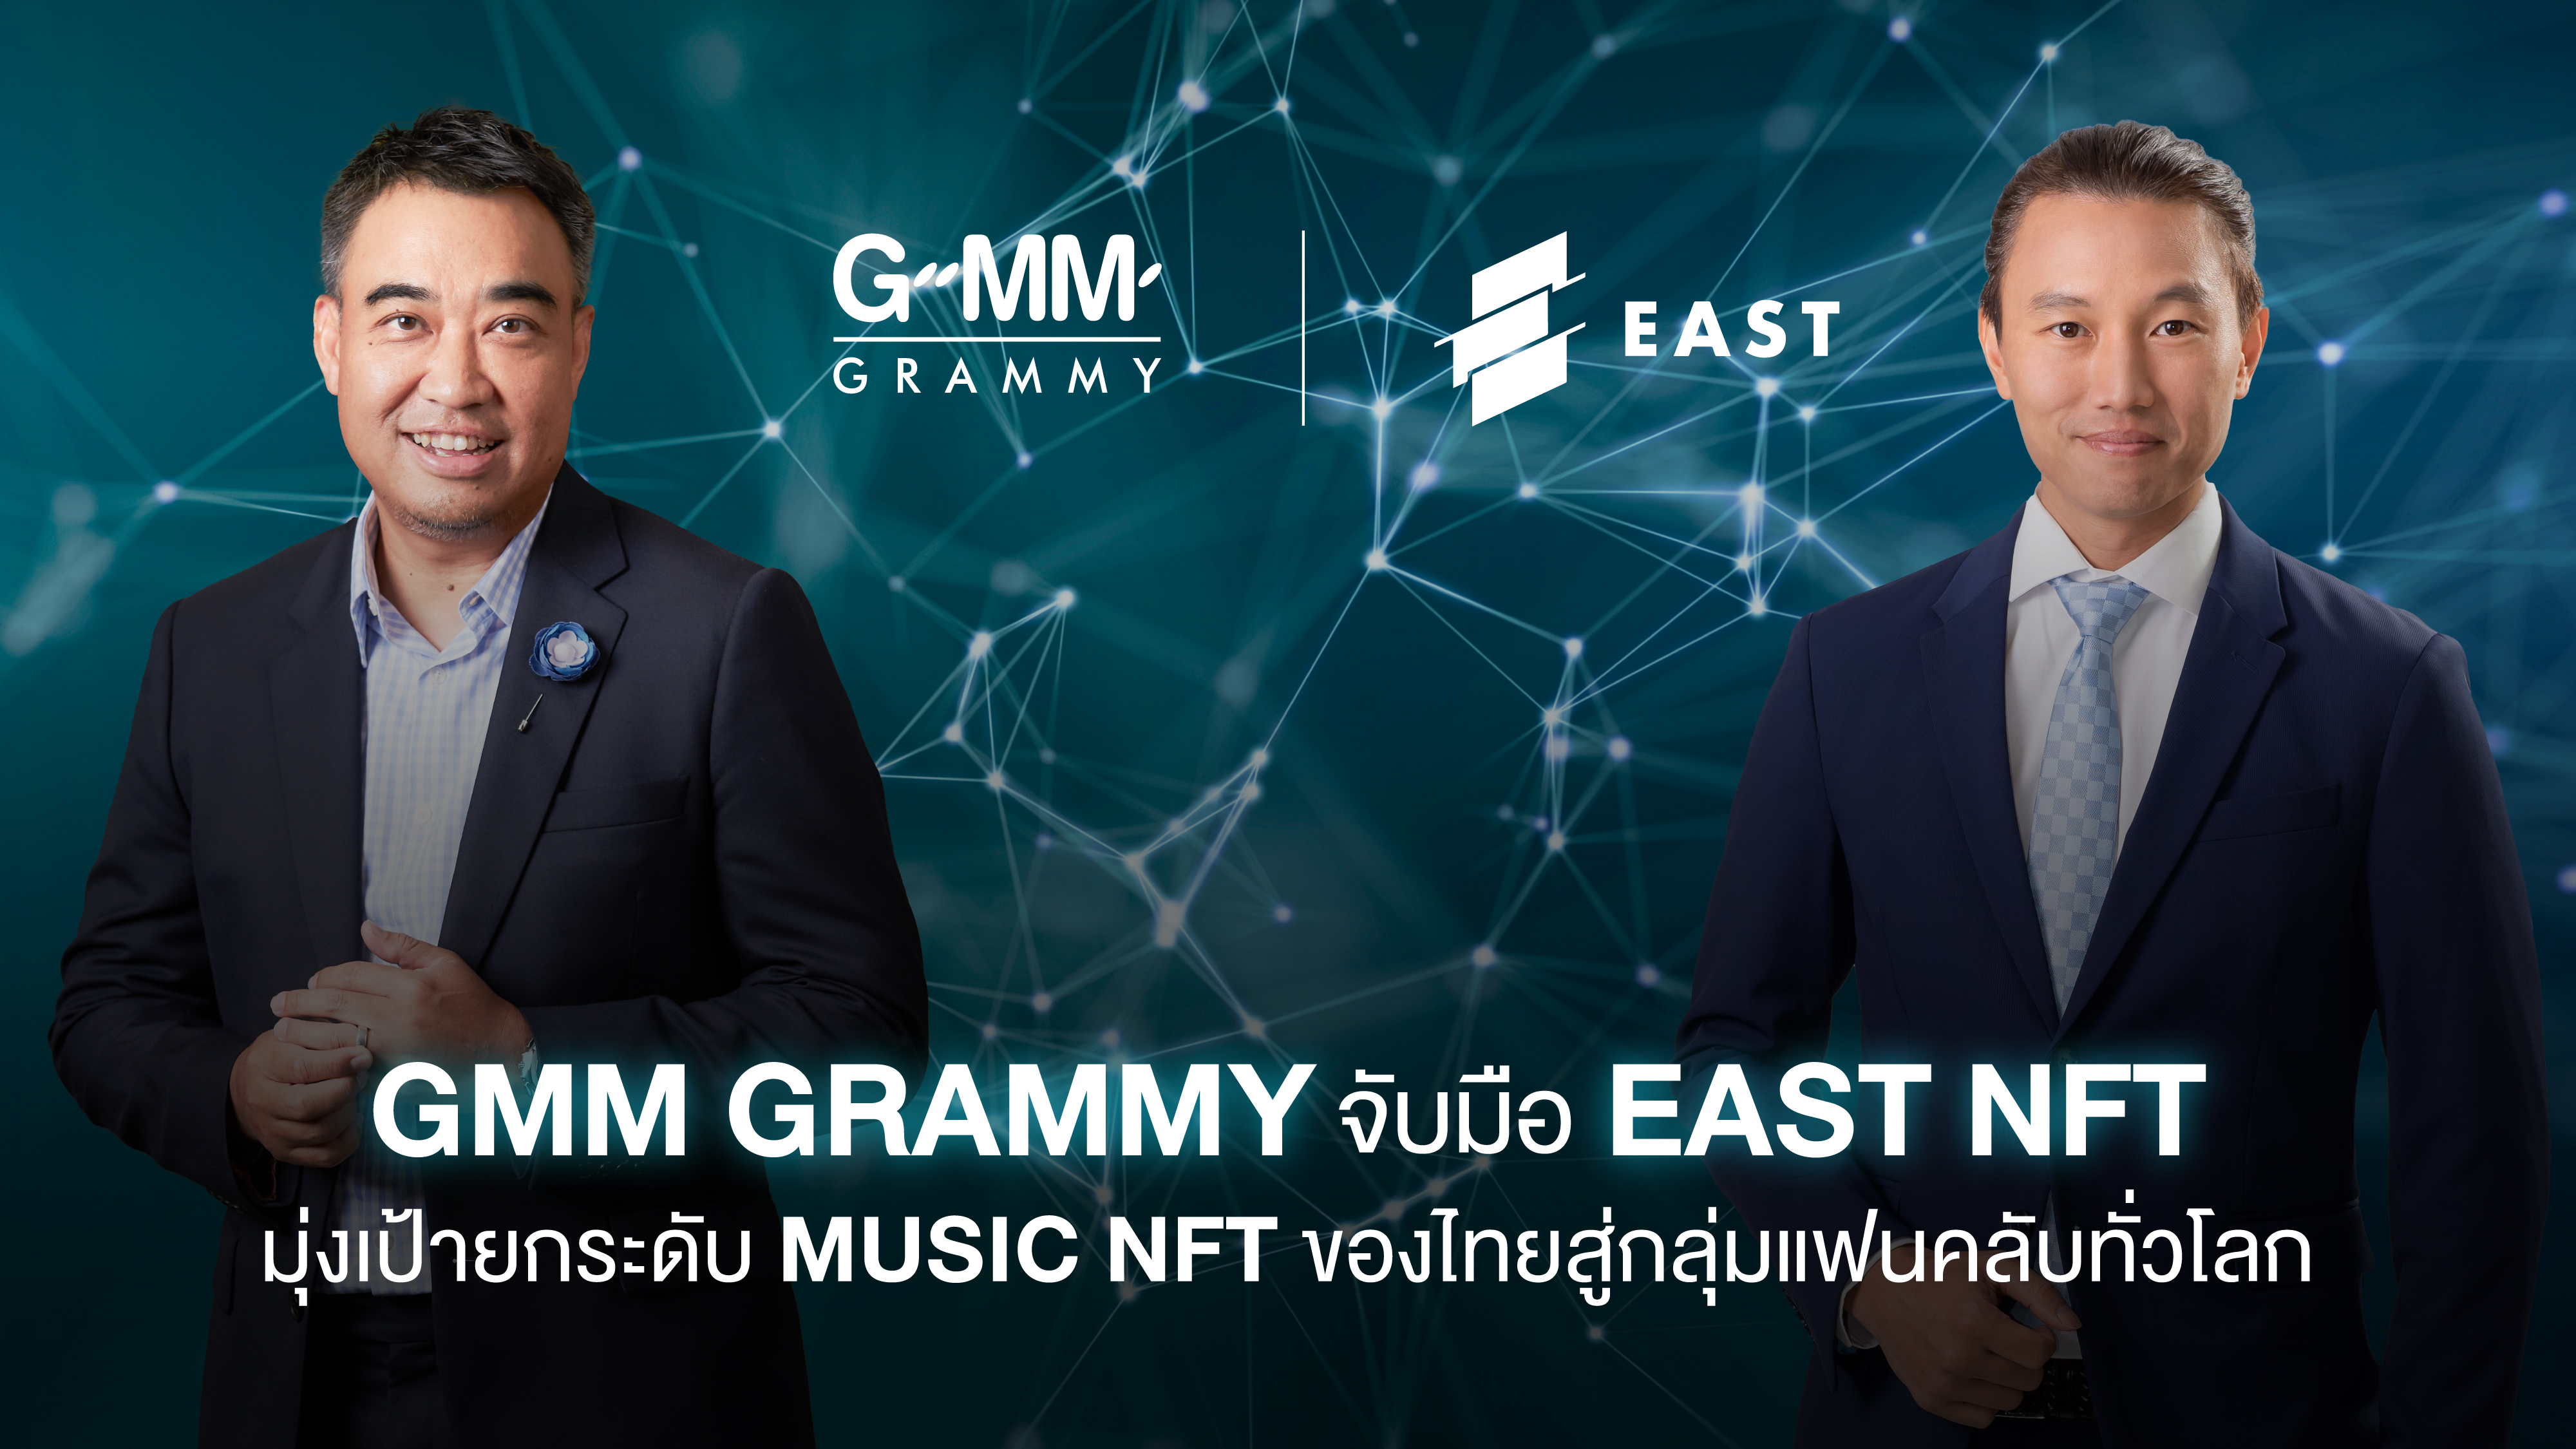 'GMM Grammy' จับมือ 'EAST NFT' ยกระดับ MUSIC NFT ไทย